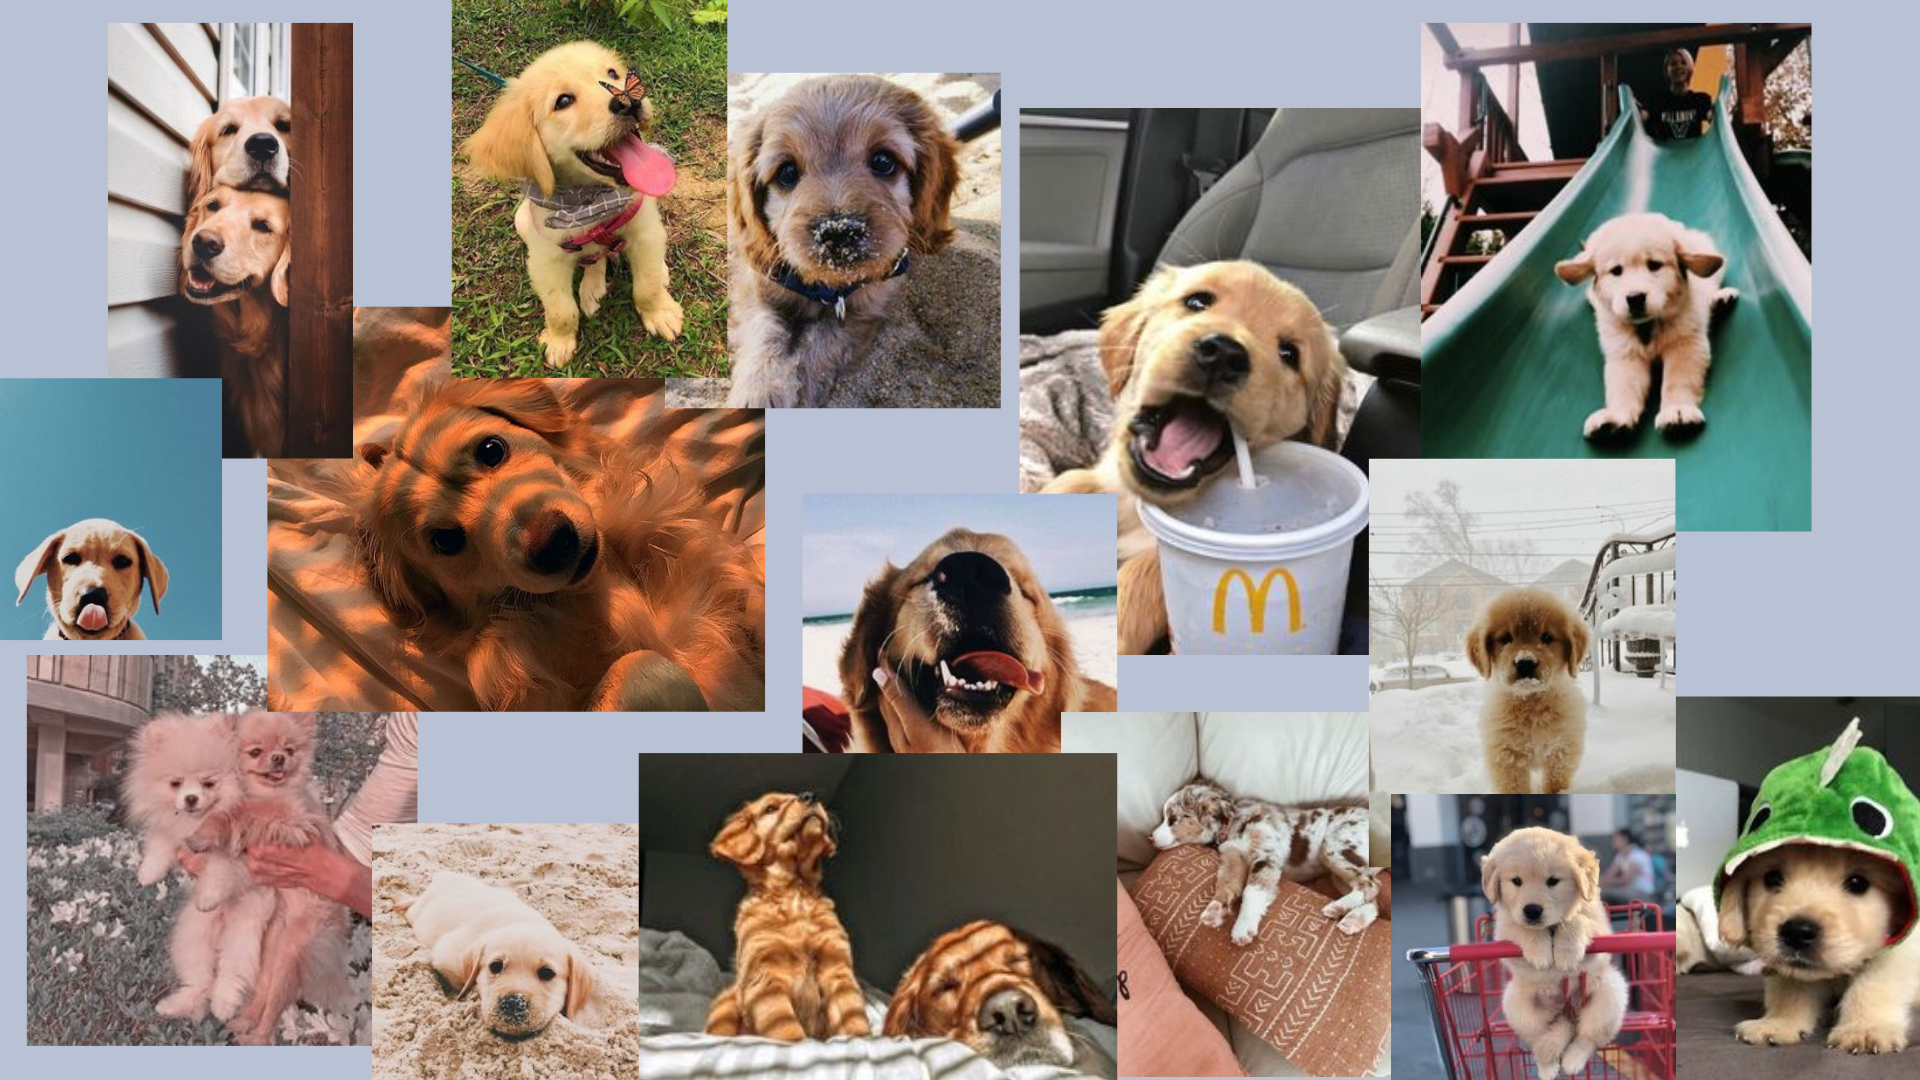 p u p p i e s. Cute puppy wallpaper, Dog wallpaper, Cute laptop wallpaper